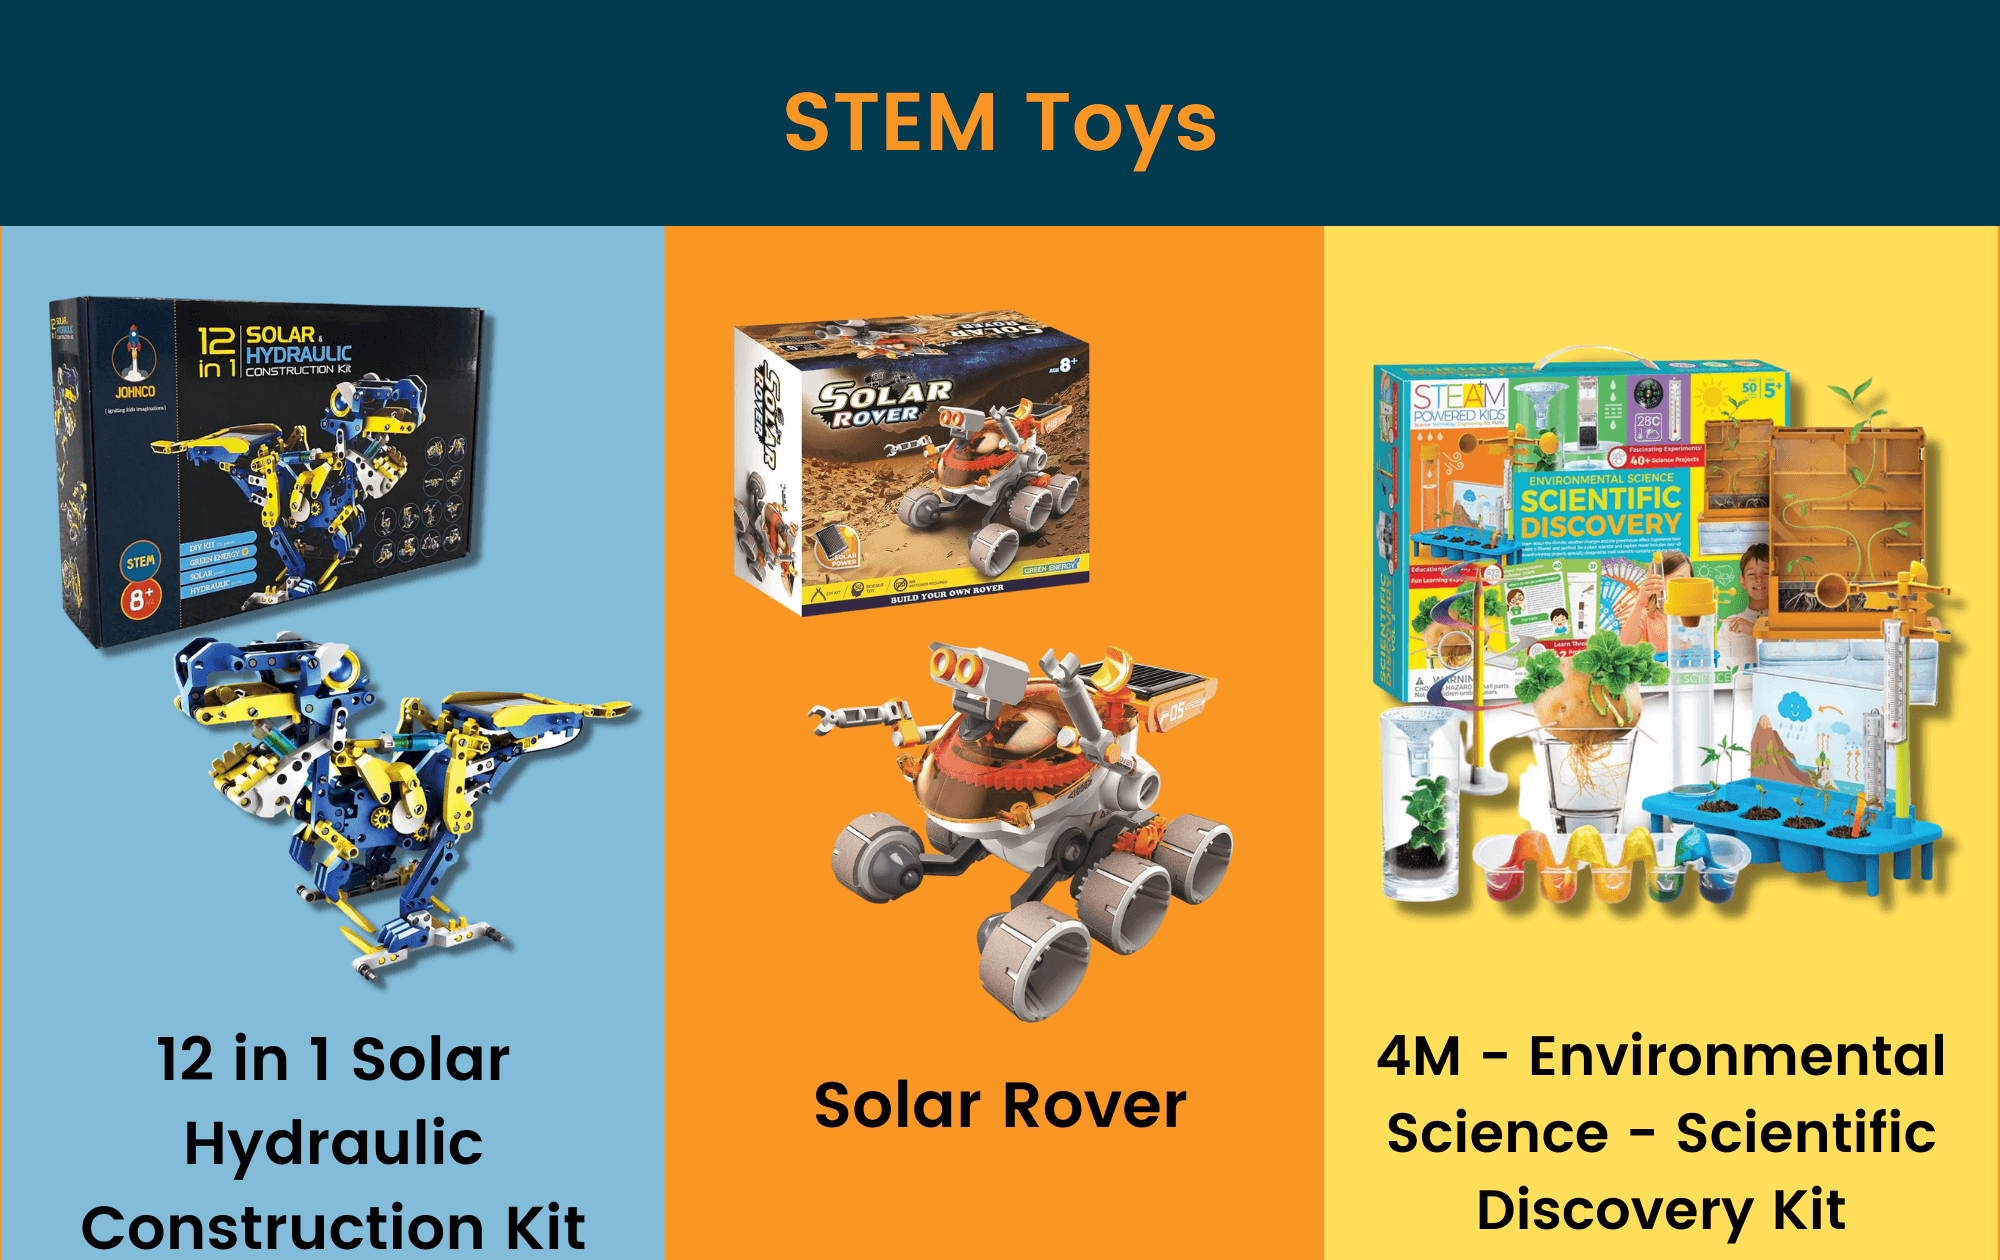 STEM toys